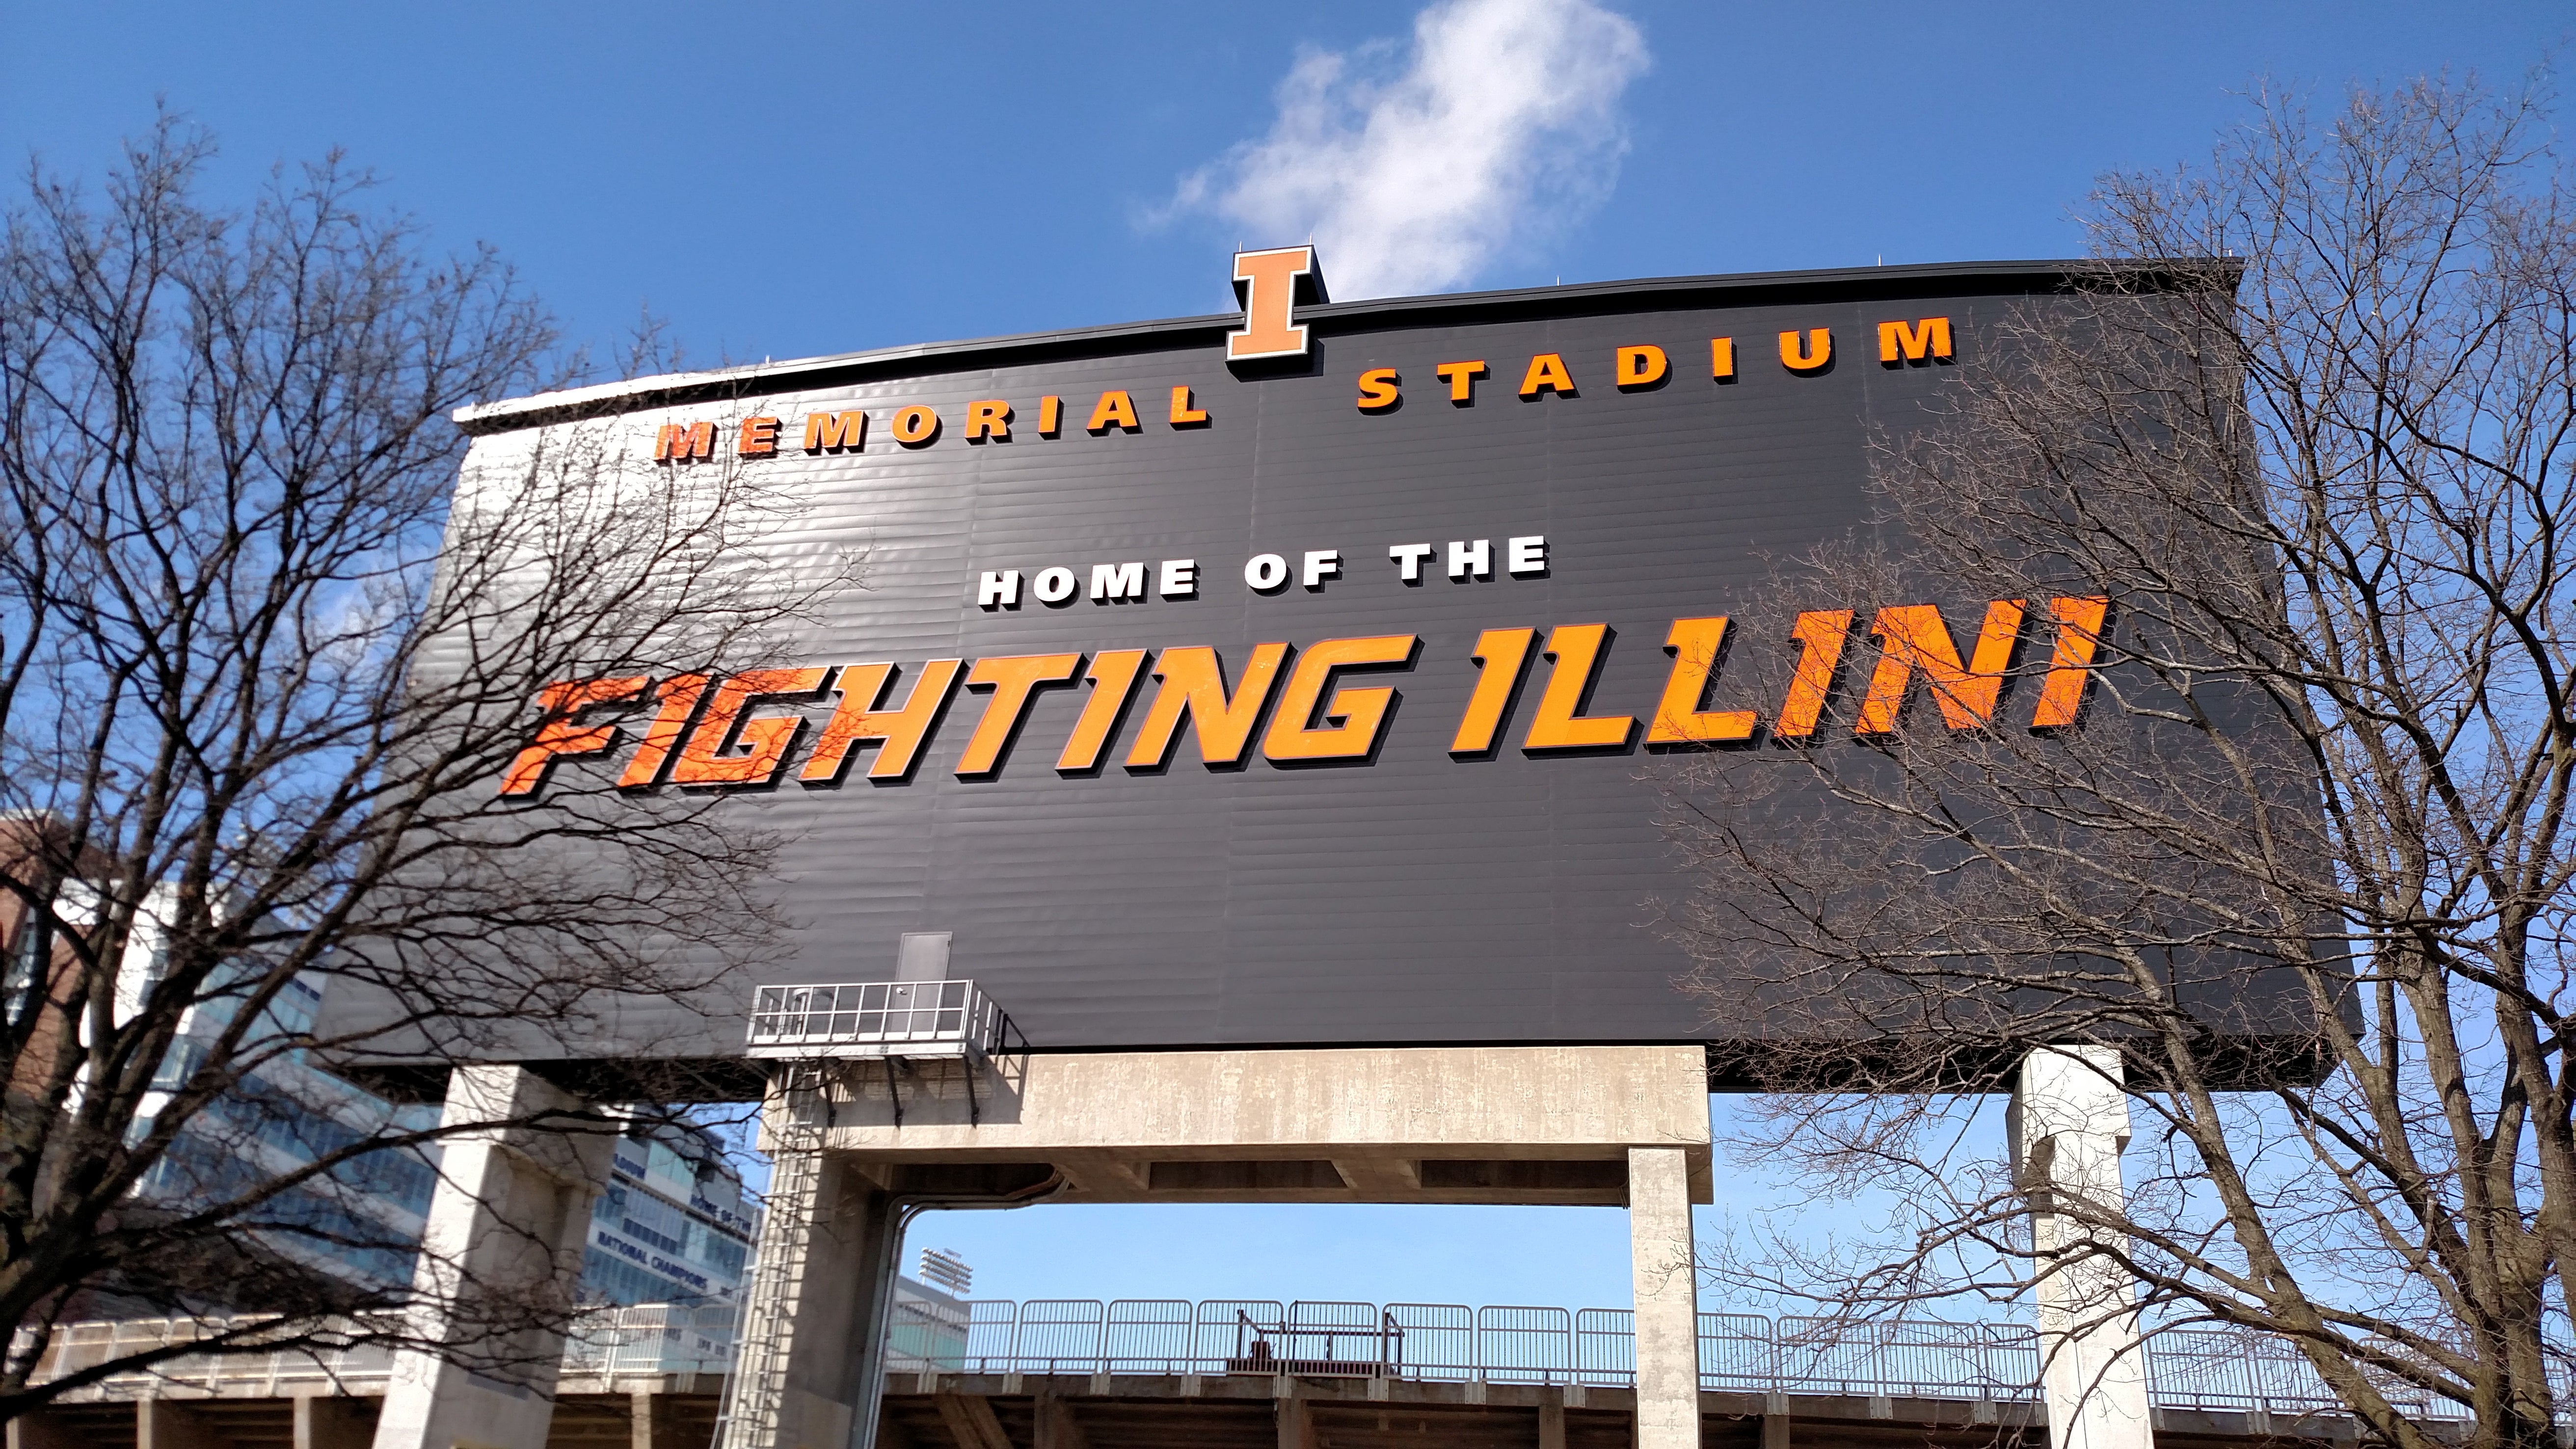 Illinois Fighting Illini Fan HQ